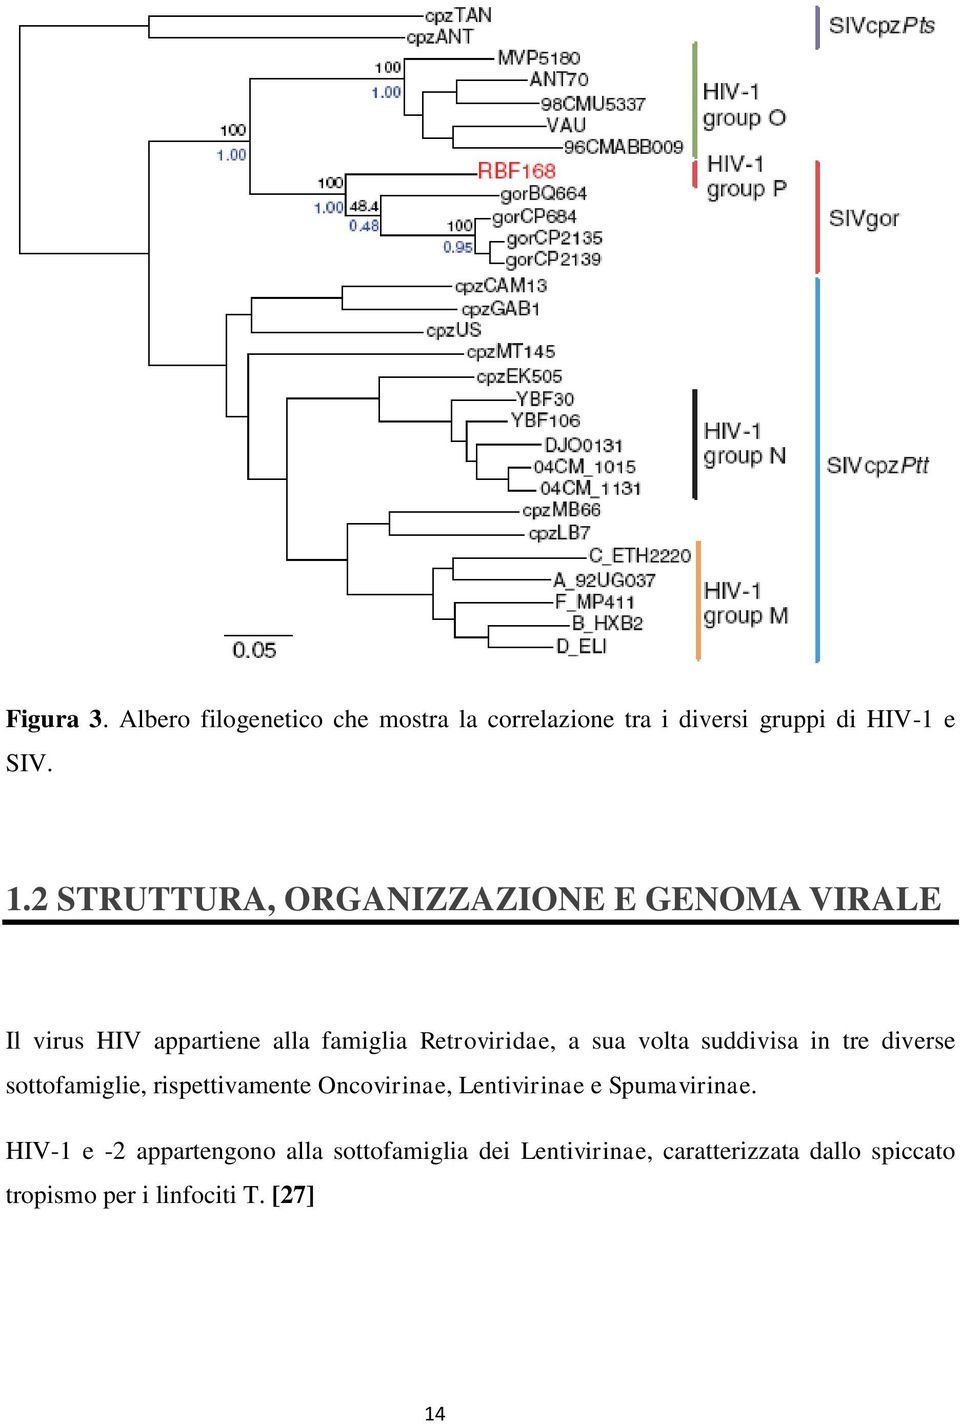 volta suddivisa in tre diverse sottofamiglie, rispettivamente Oncovirinae, Lentivirinae e Spumavirinae.